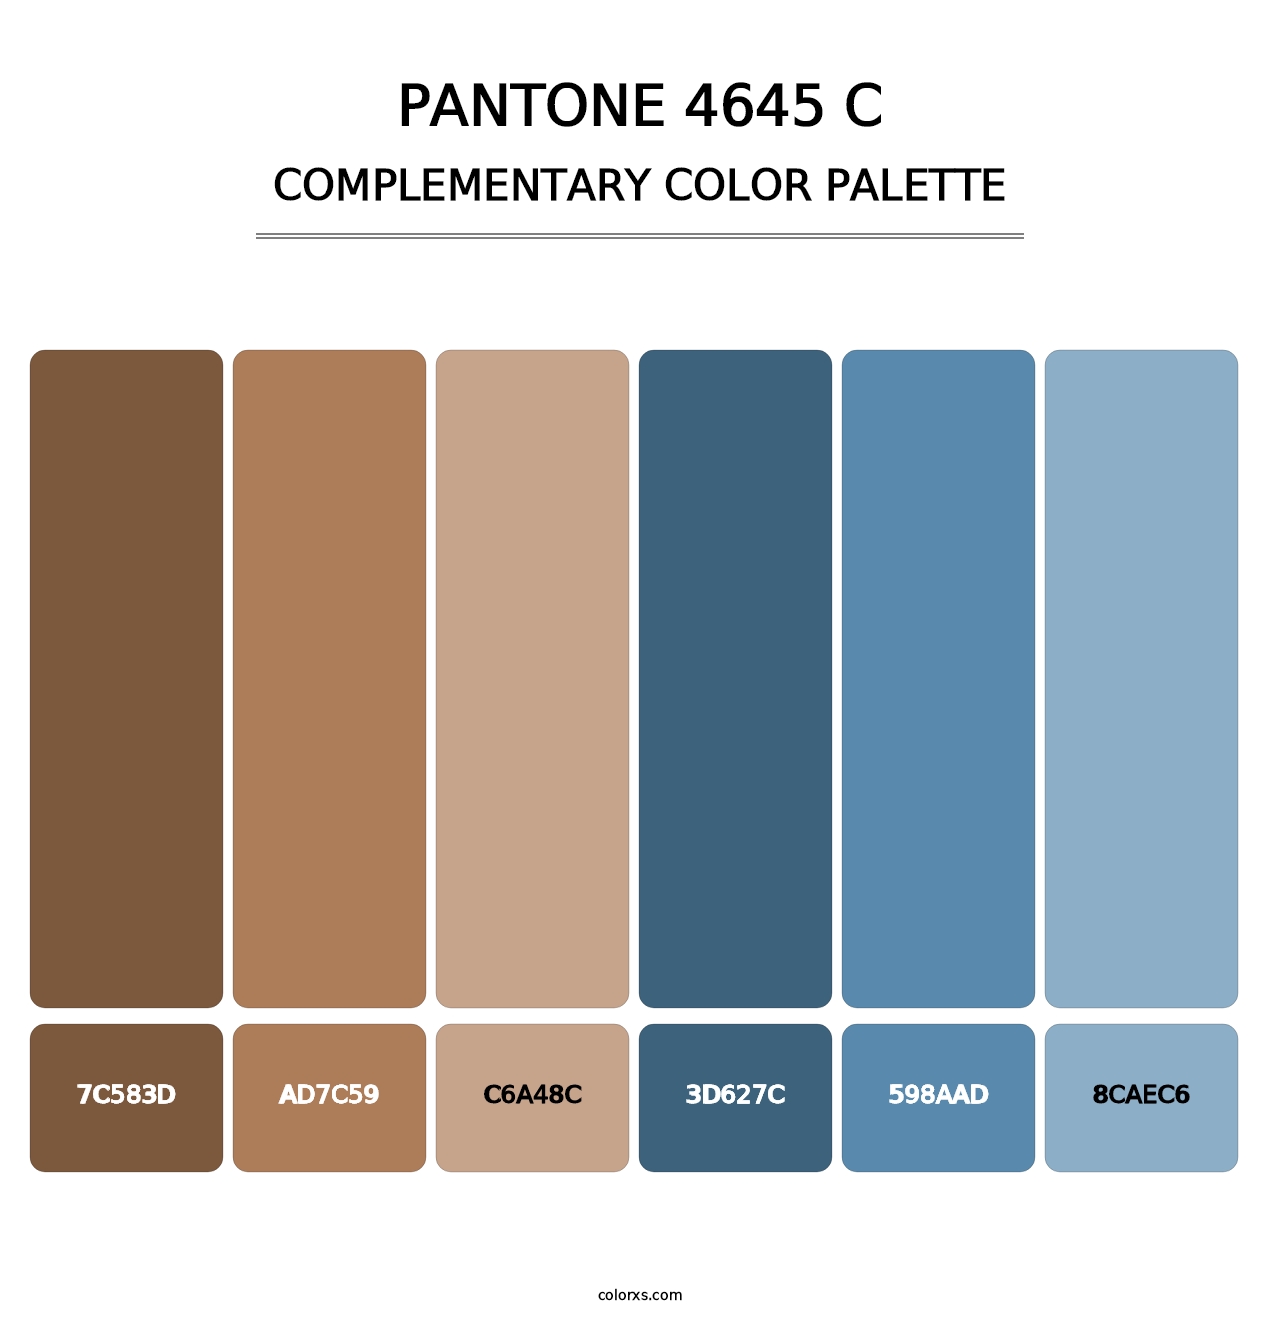 PANTONE 4645 C - Complementary Color Palette